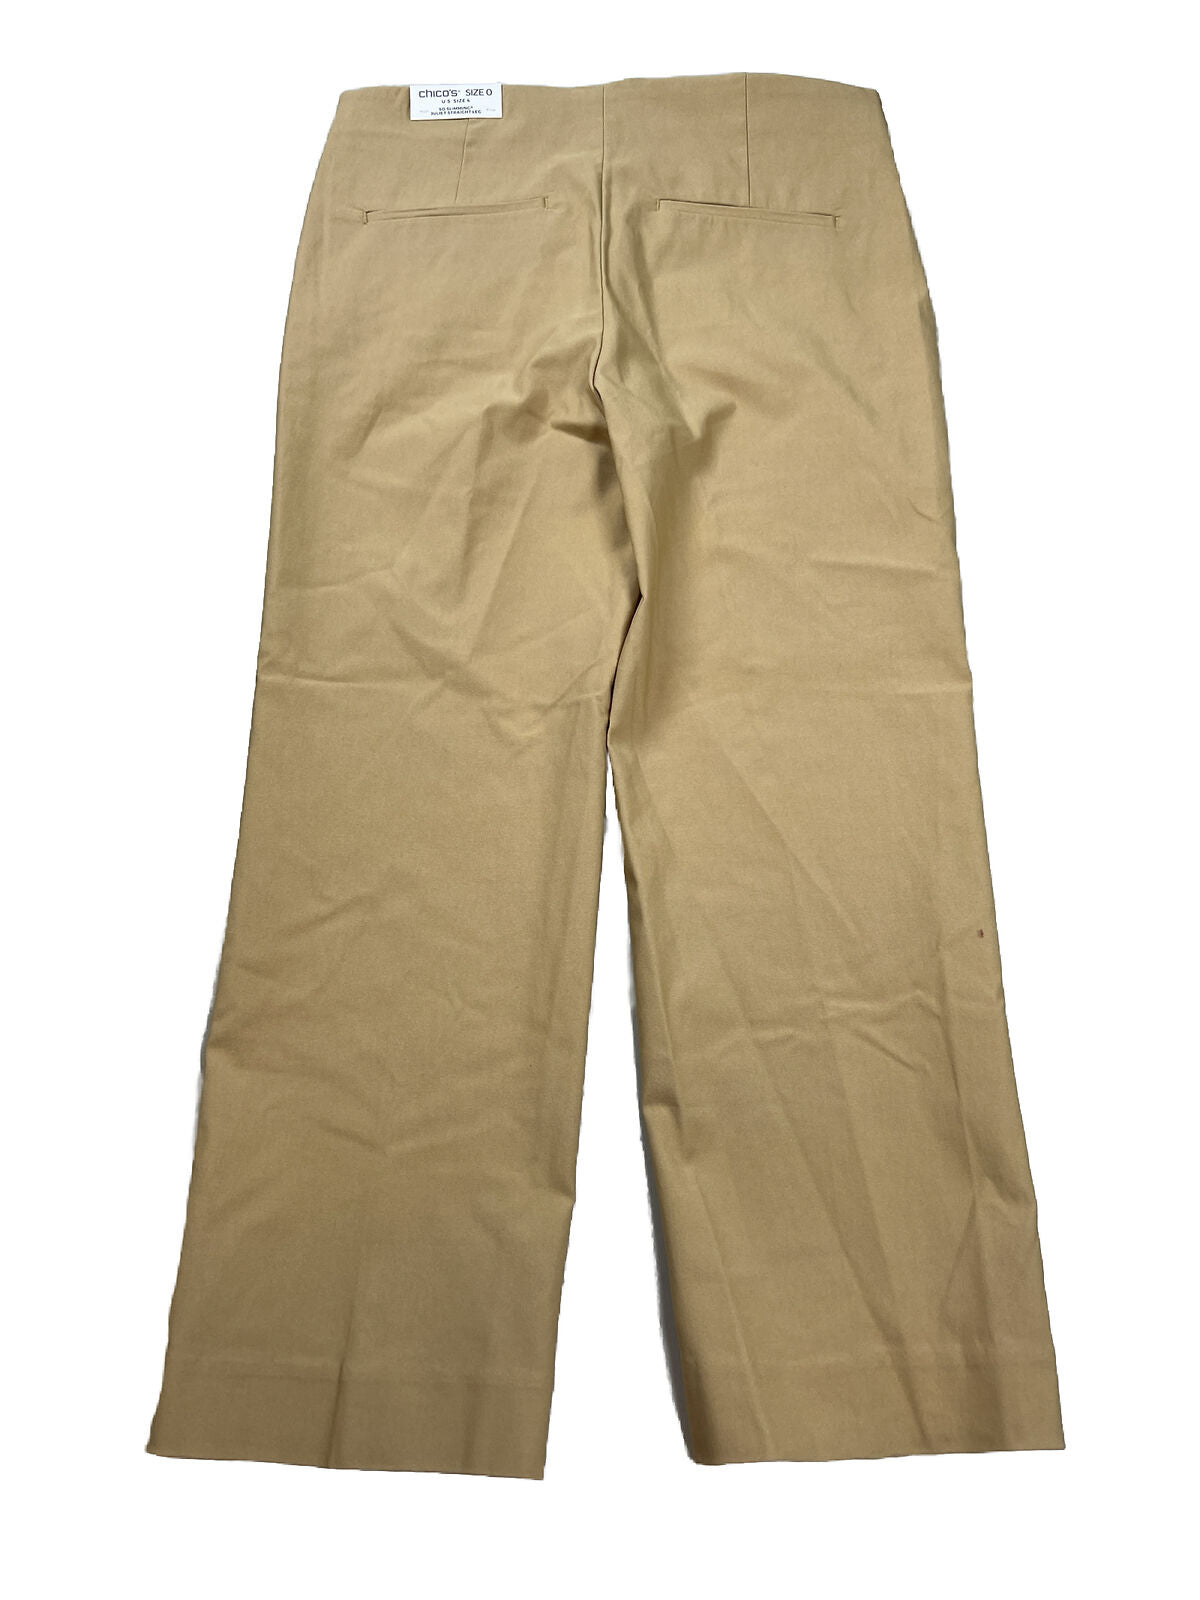 NEW Chico's Women's Beige Pull On Crop Pants - 0/US 4